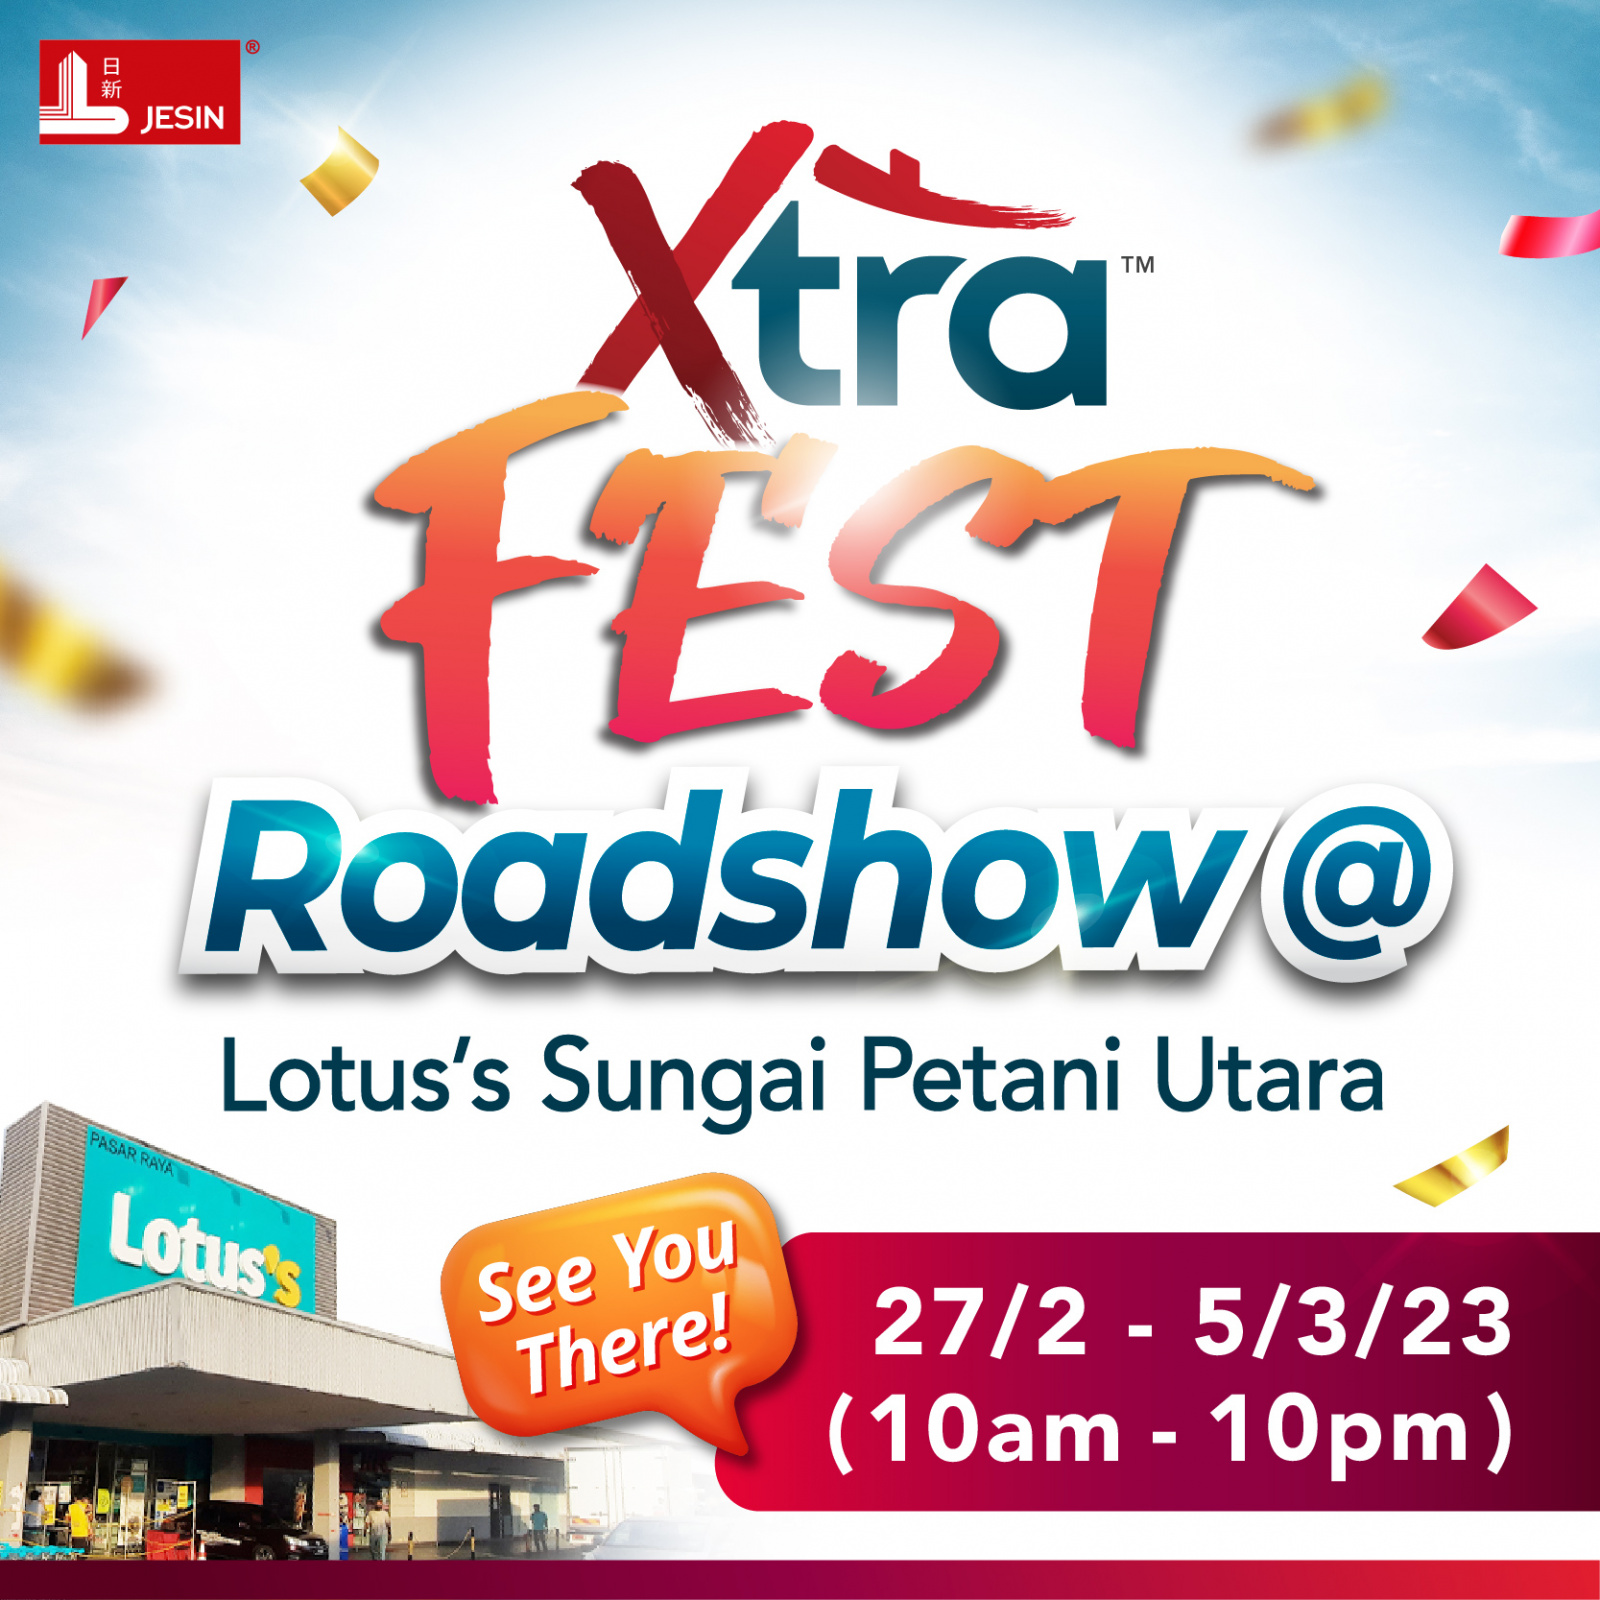 Xtra Fest™ Roadshow @ Lotus's Sungai Petani Utara